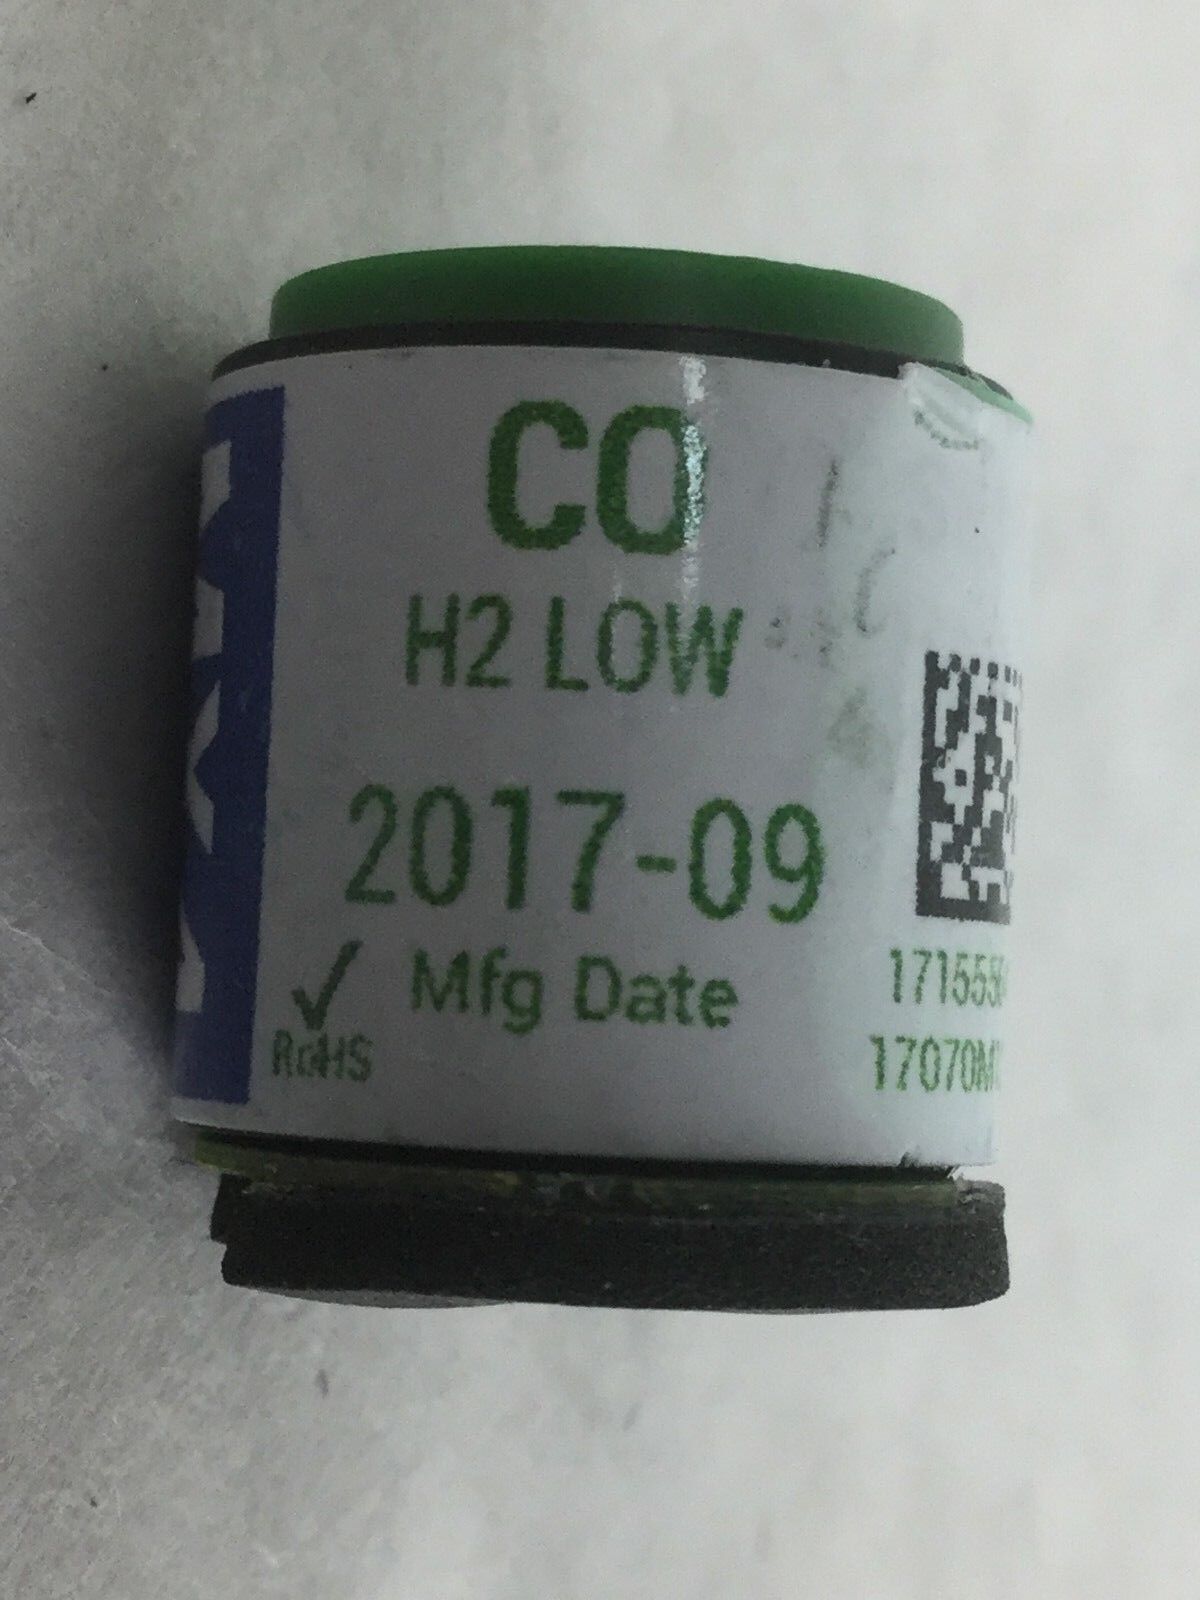 Industrial Scientific, 17155564, Carbon Monoxide (CO/H2 low) Sensor, Mfg 9/2017